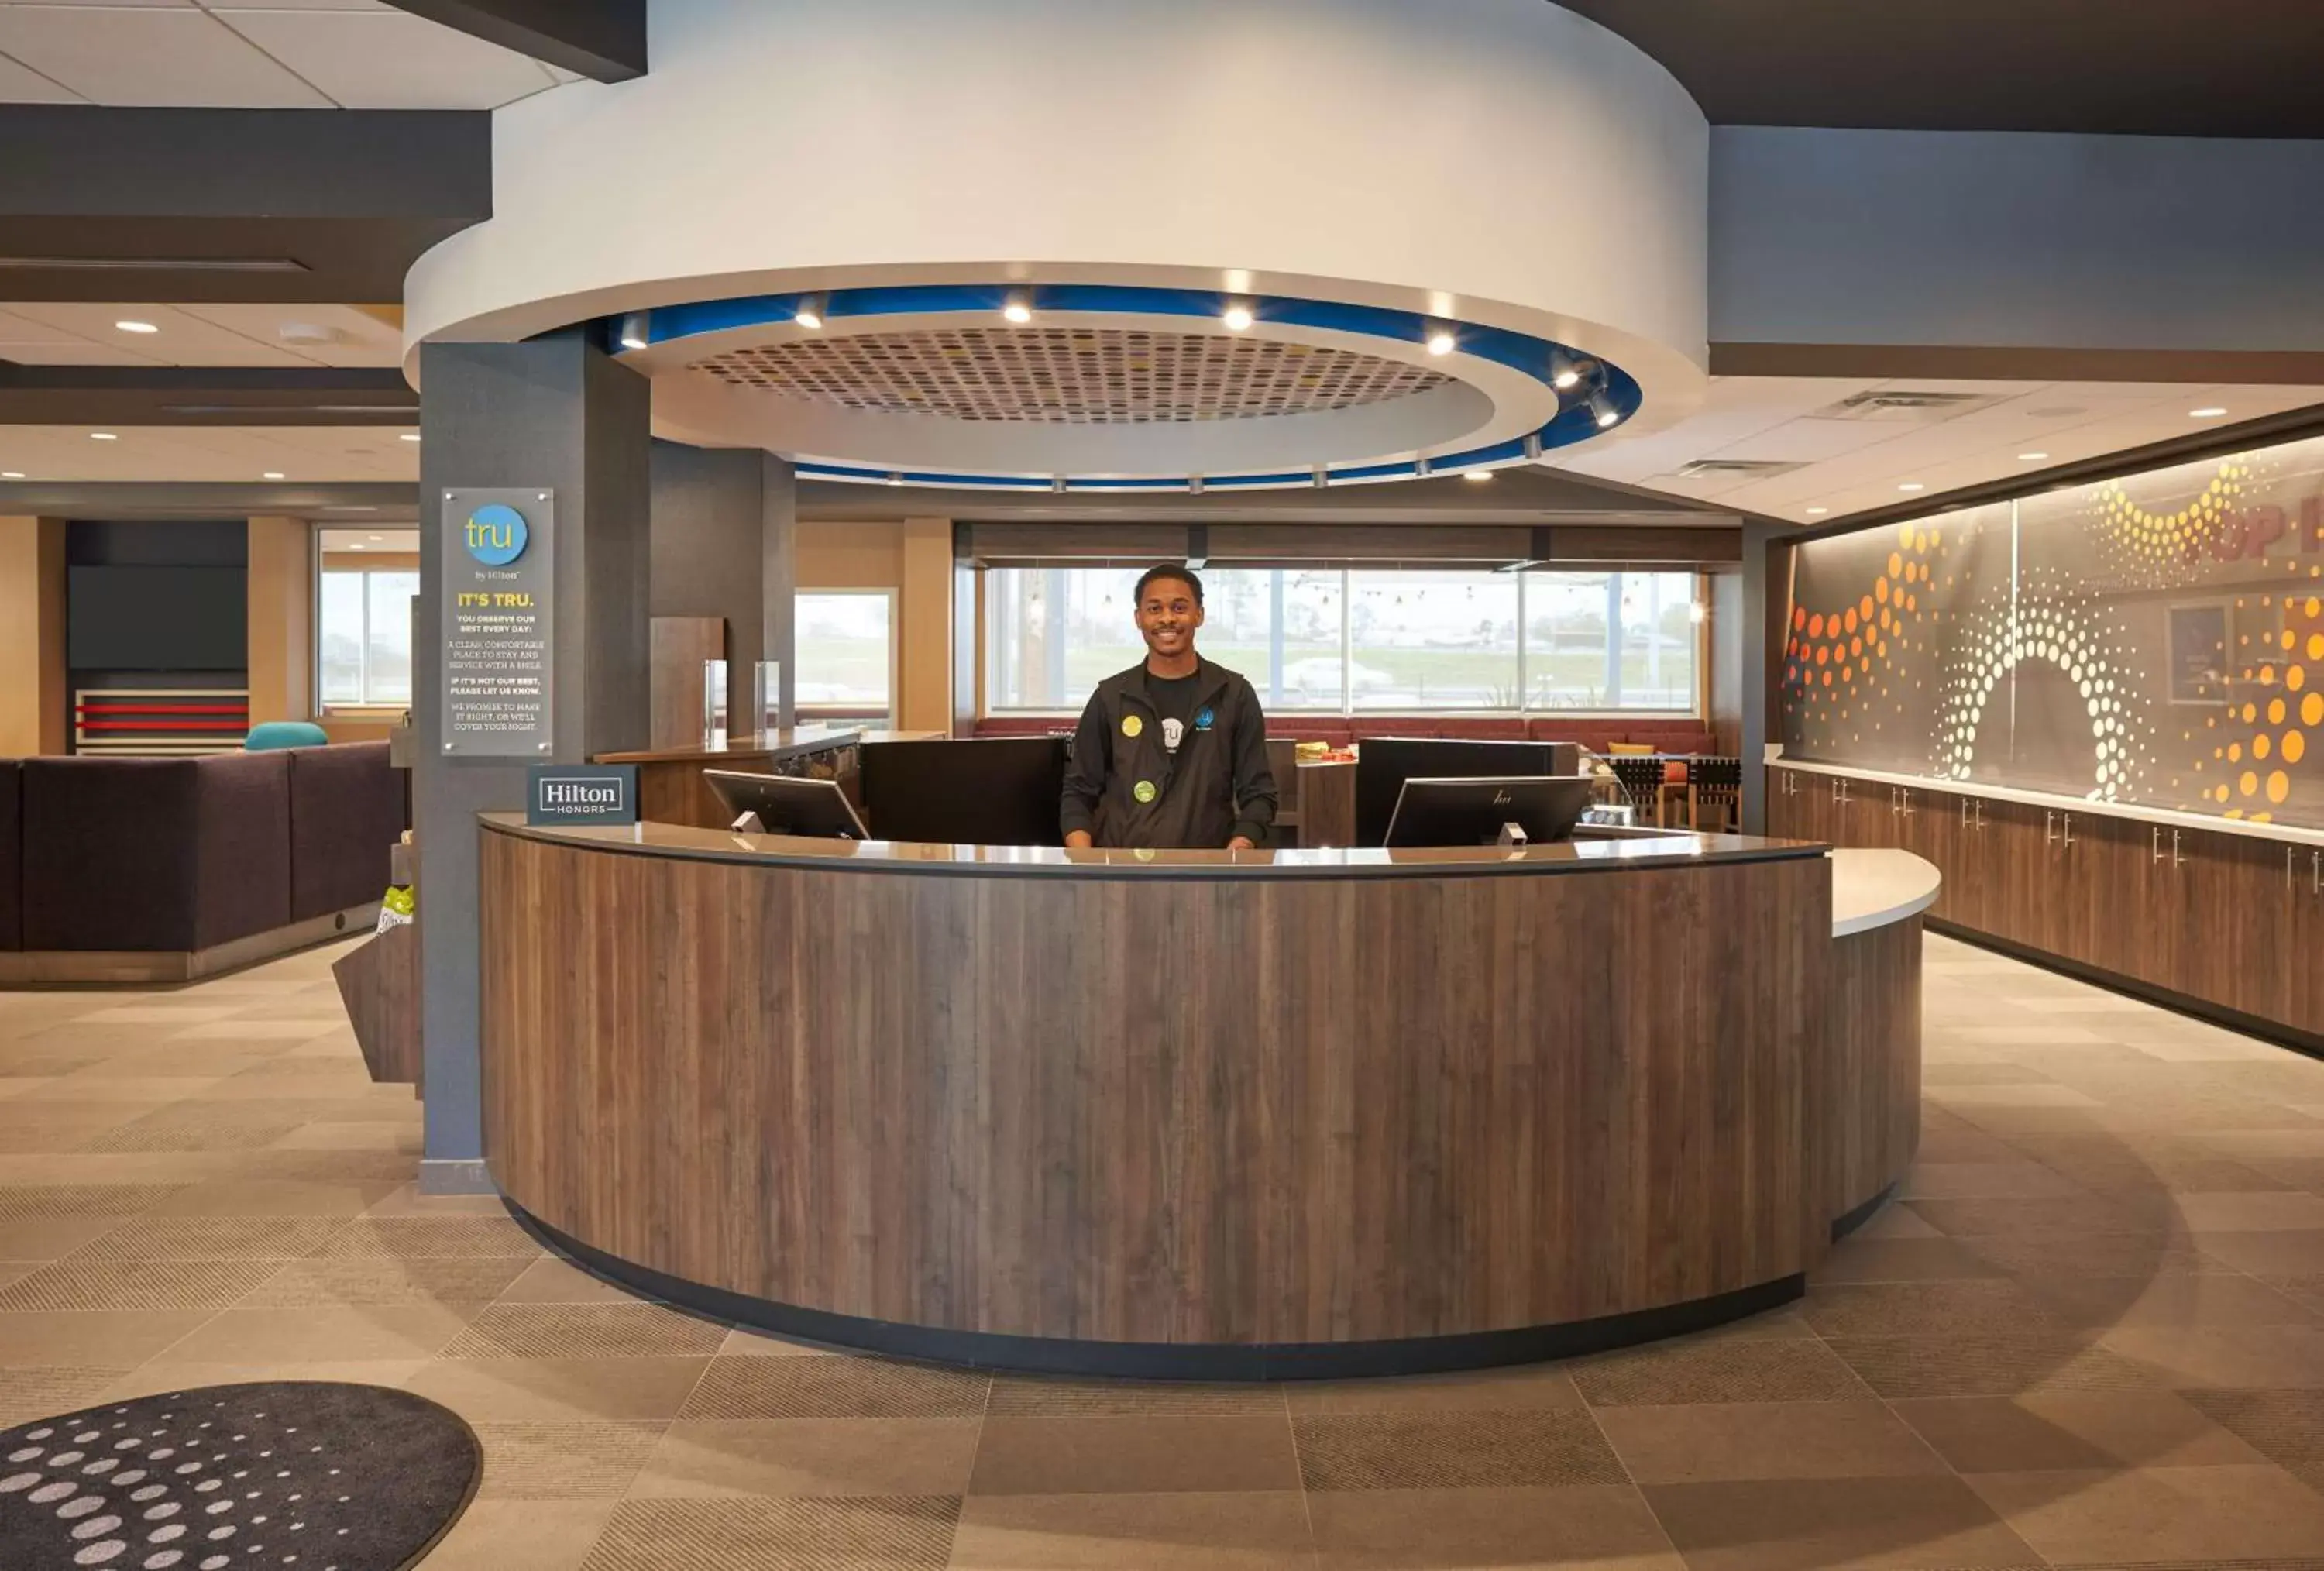 Lobby or reception in Tru By Hilton Jacksonville South Mandarin, Fl